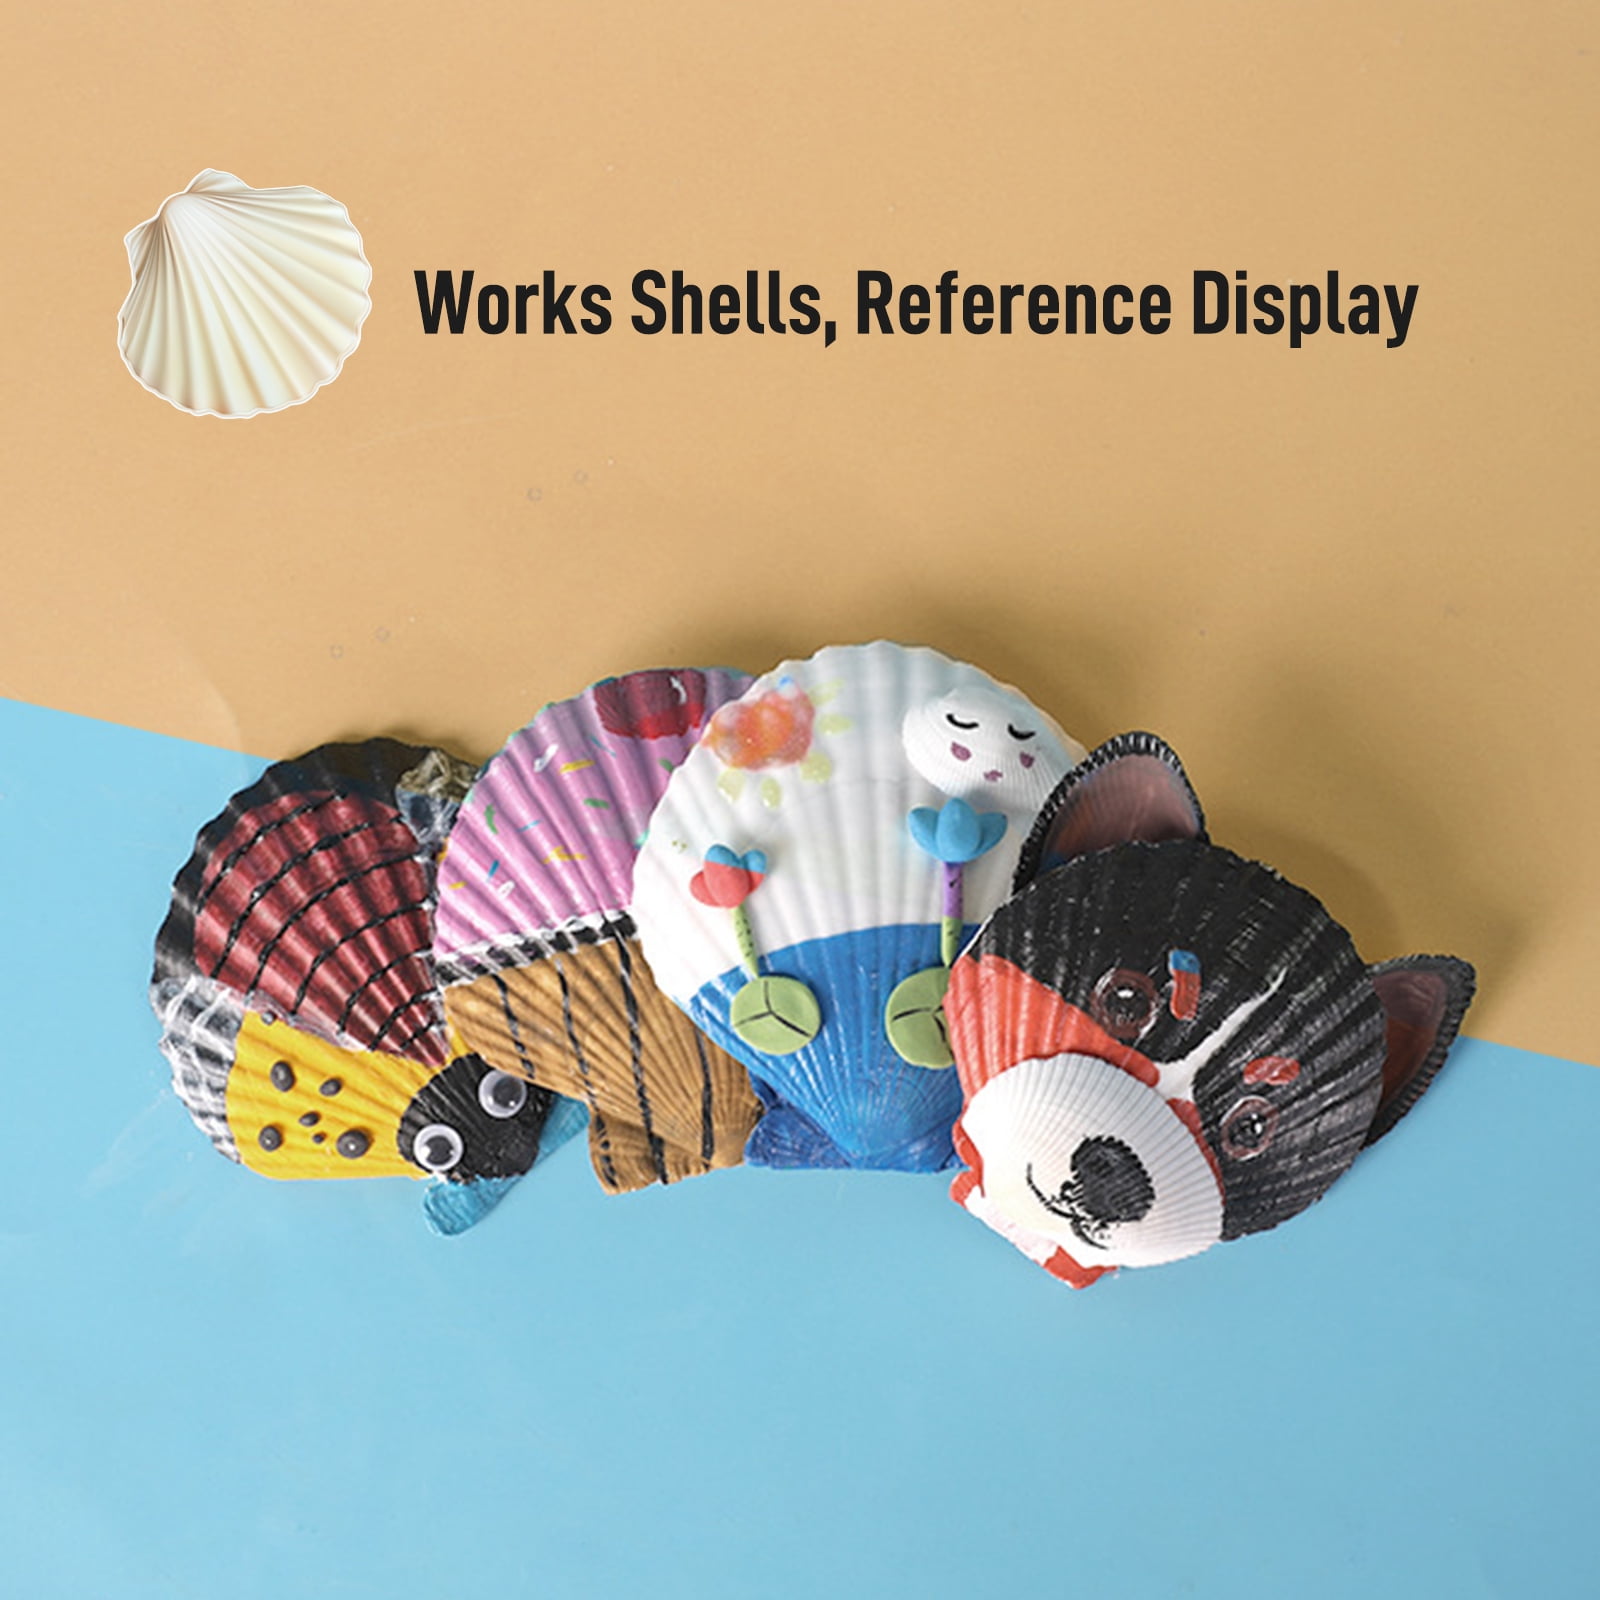  Kwestsync Shell Painting Craft Kit for Kids, Arts